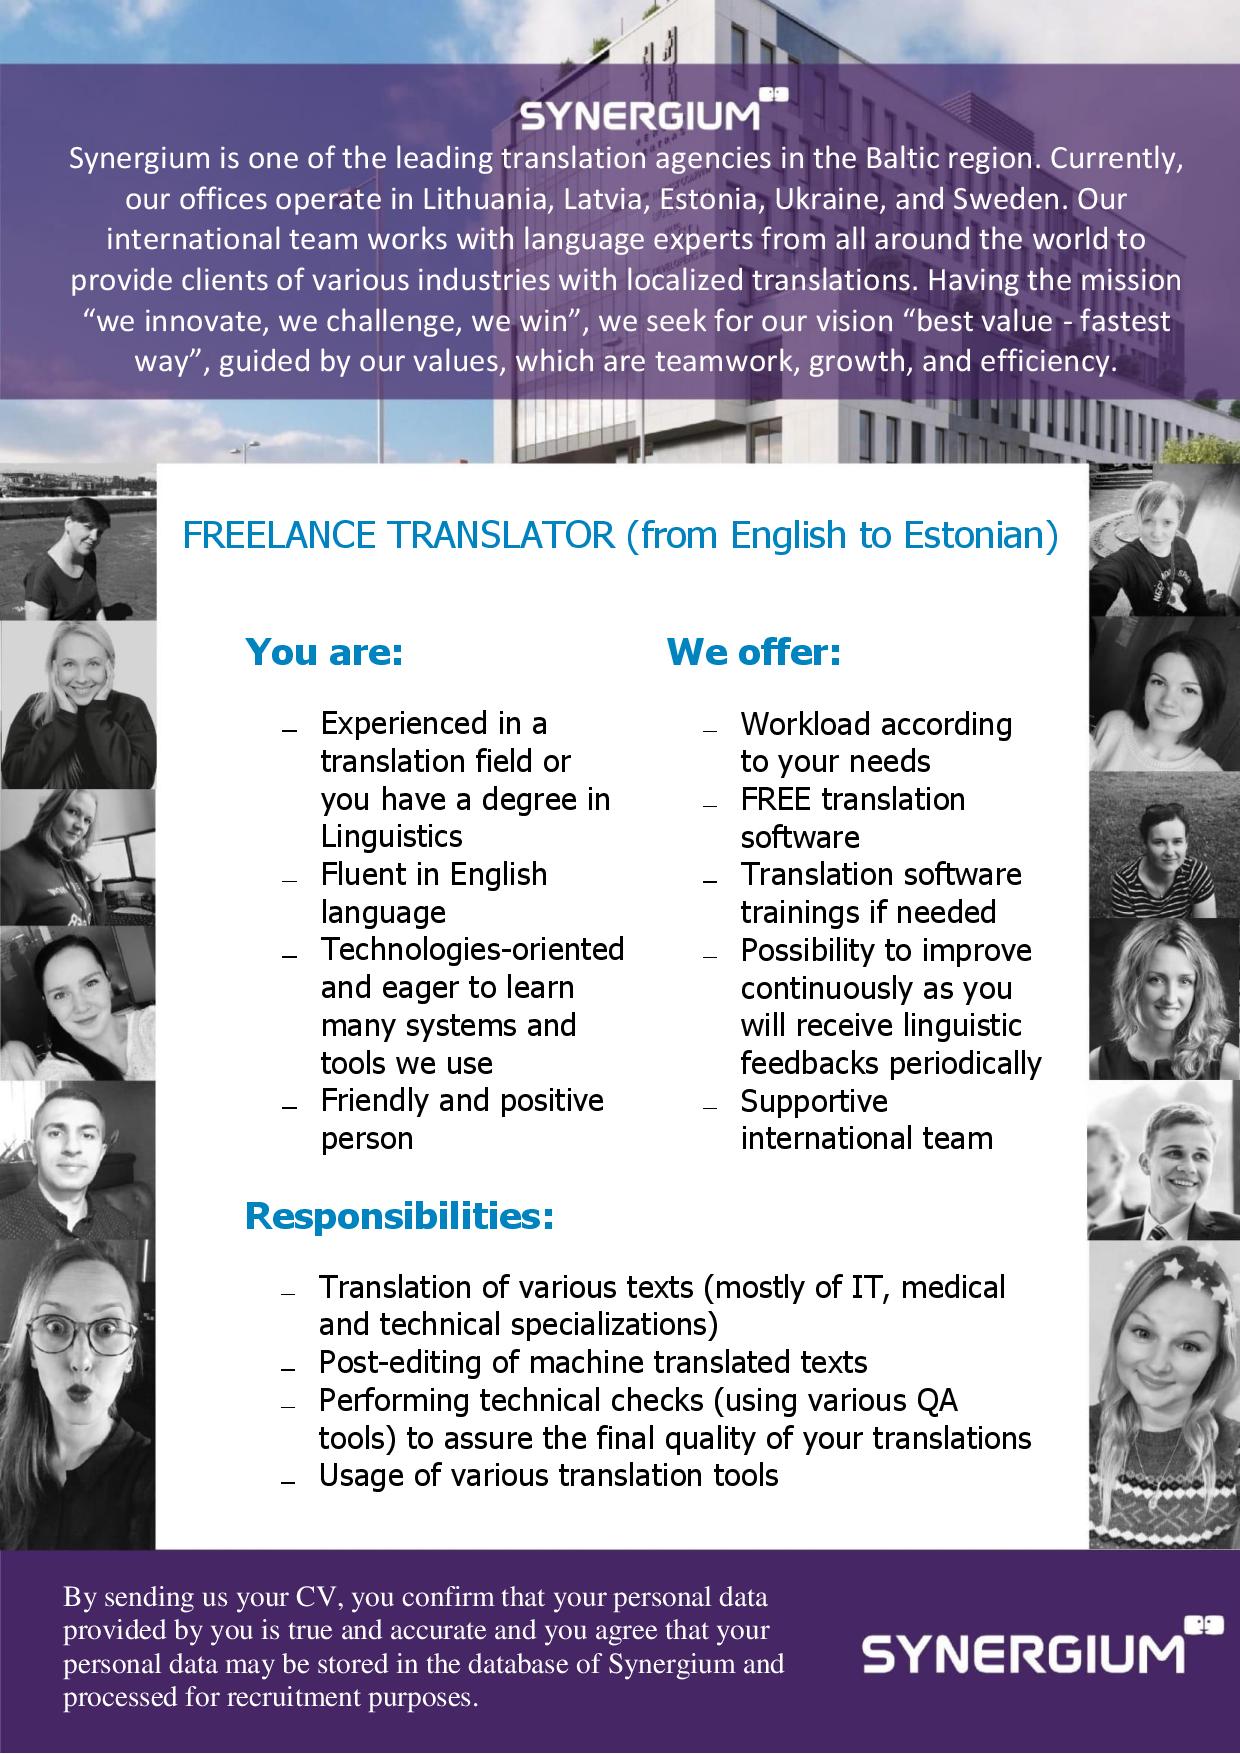 freelance translator from english to estonian job advertisement synergium